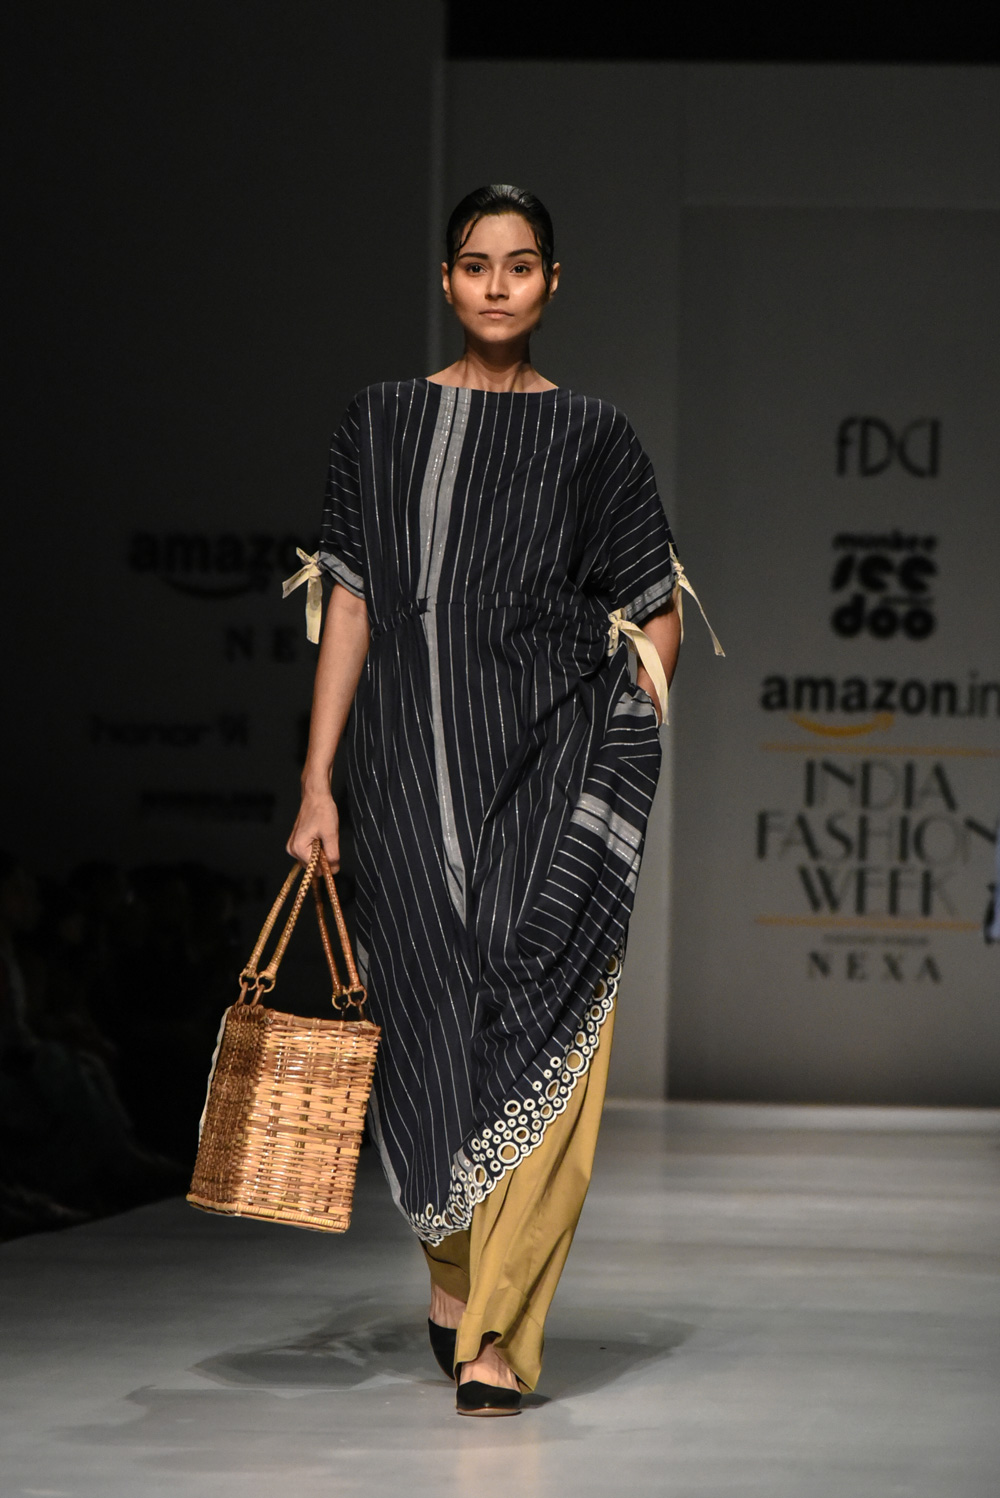 Munkee.See.Munkee.Doo FDCI Amazon India Fashion Week Spring Summer 2018 Look 10